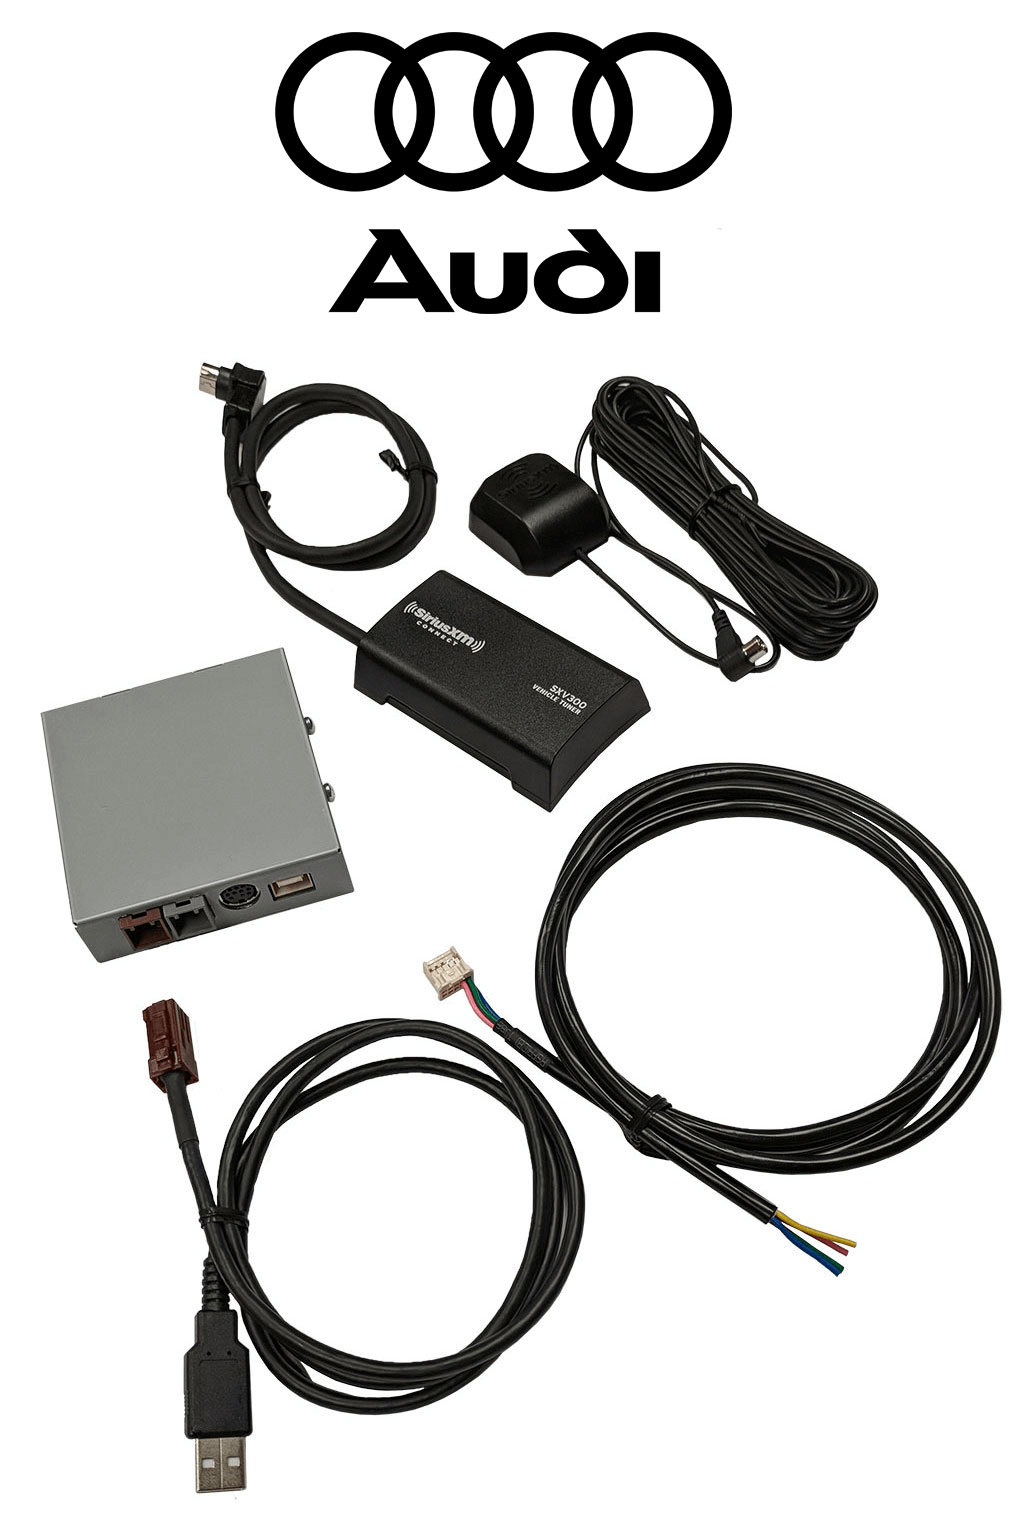 Audi SiriusXM Satellite Radio Factory Stereo Add-on Tuner Kit